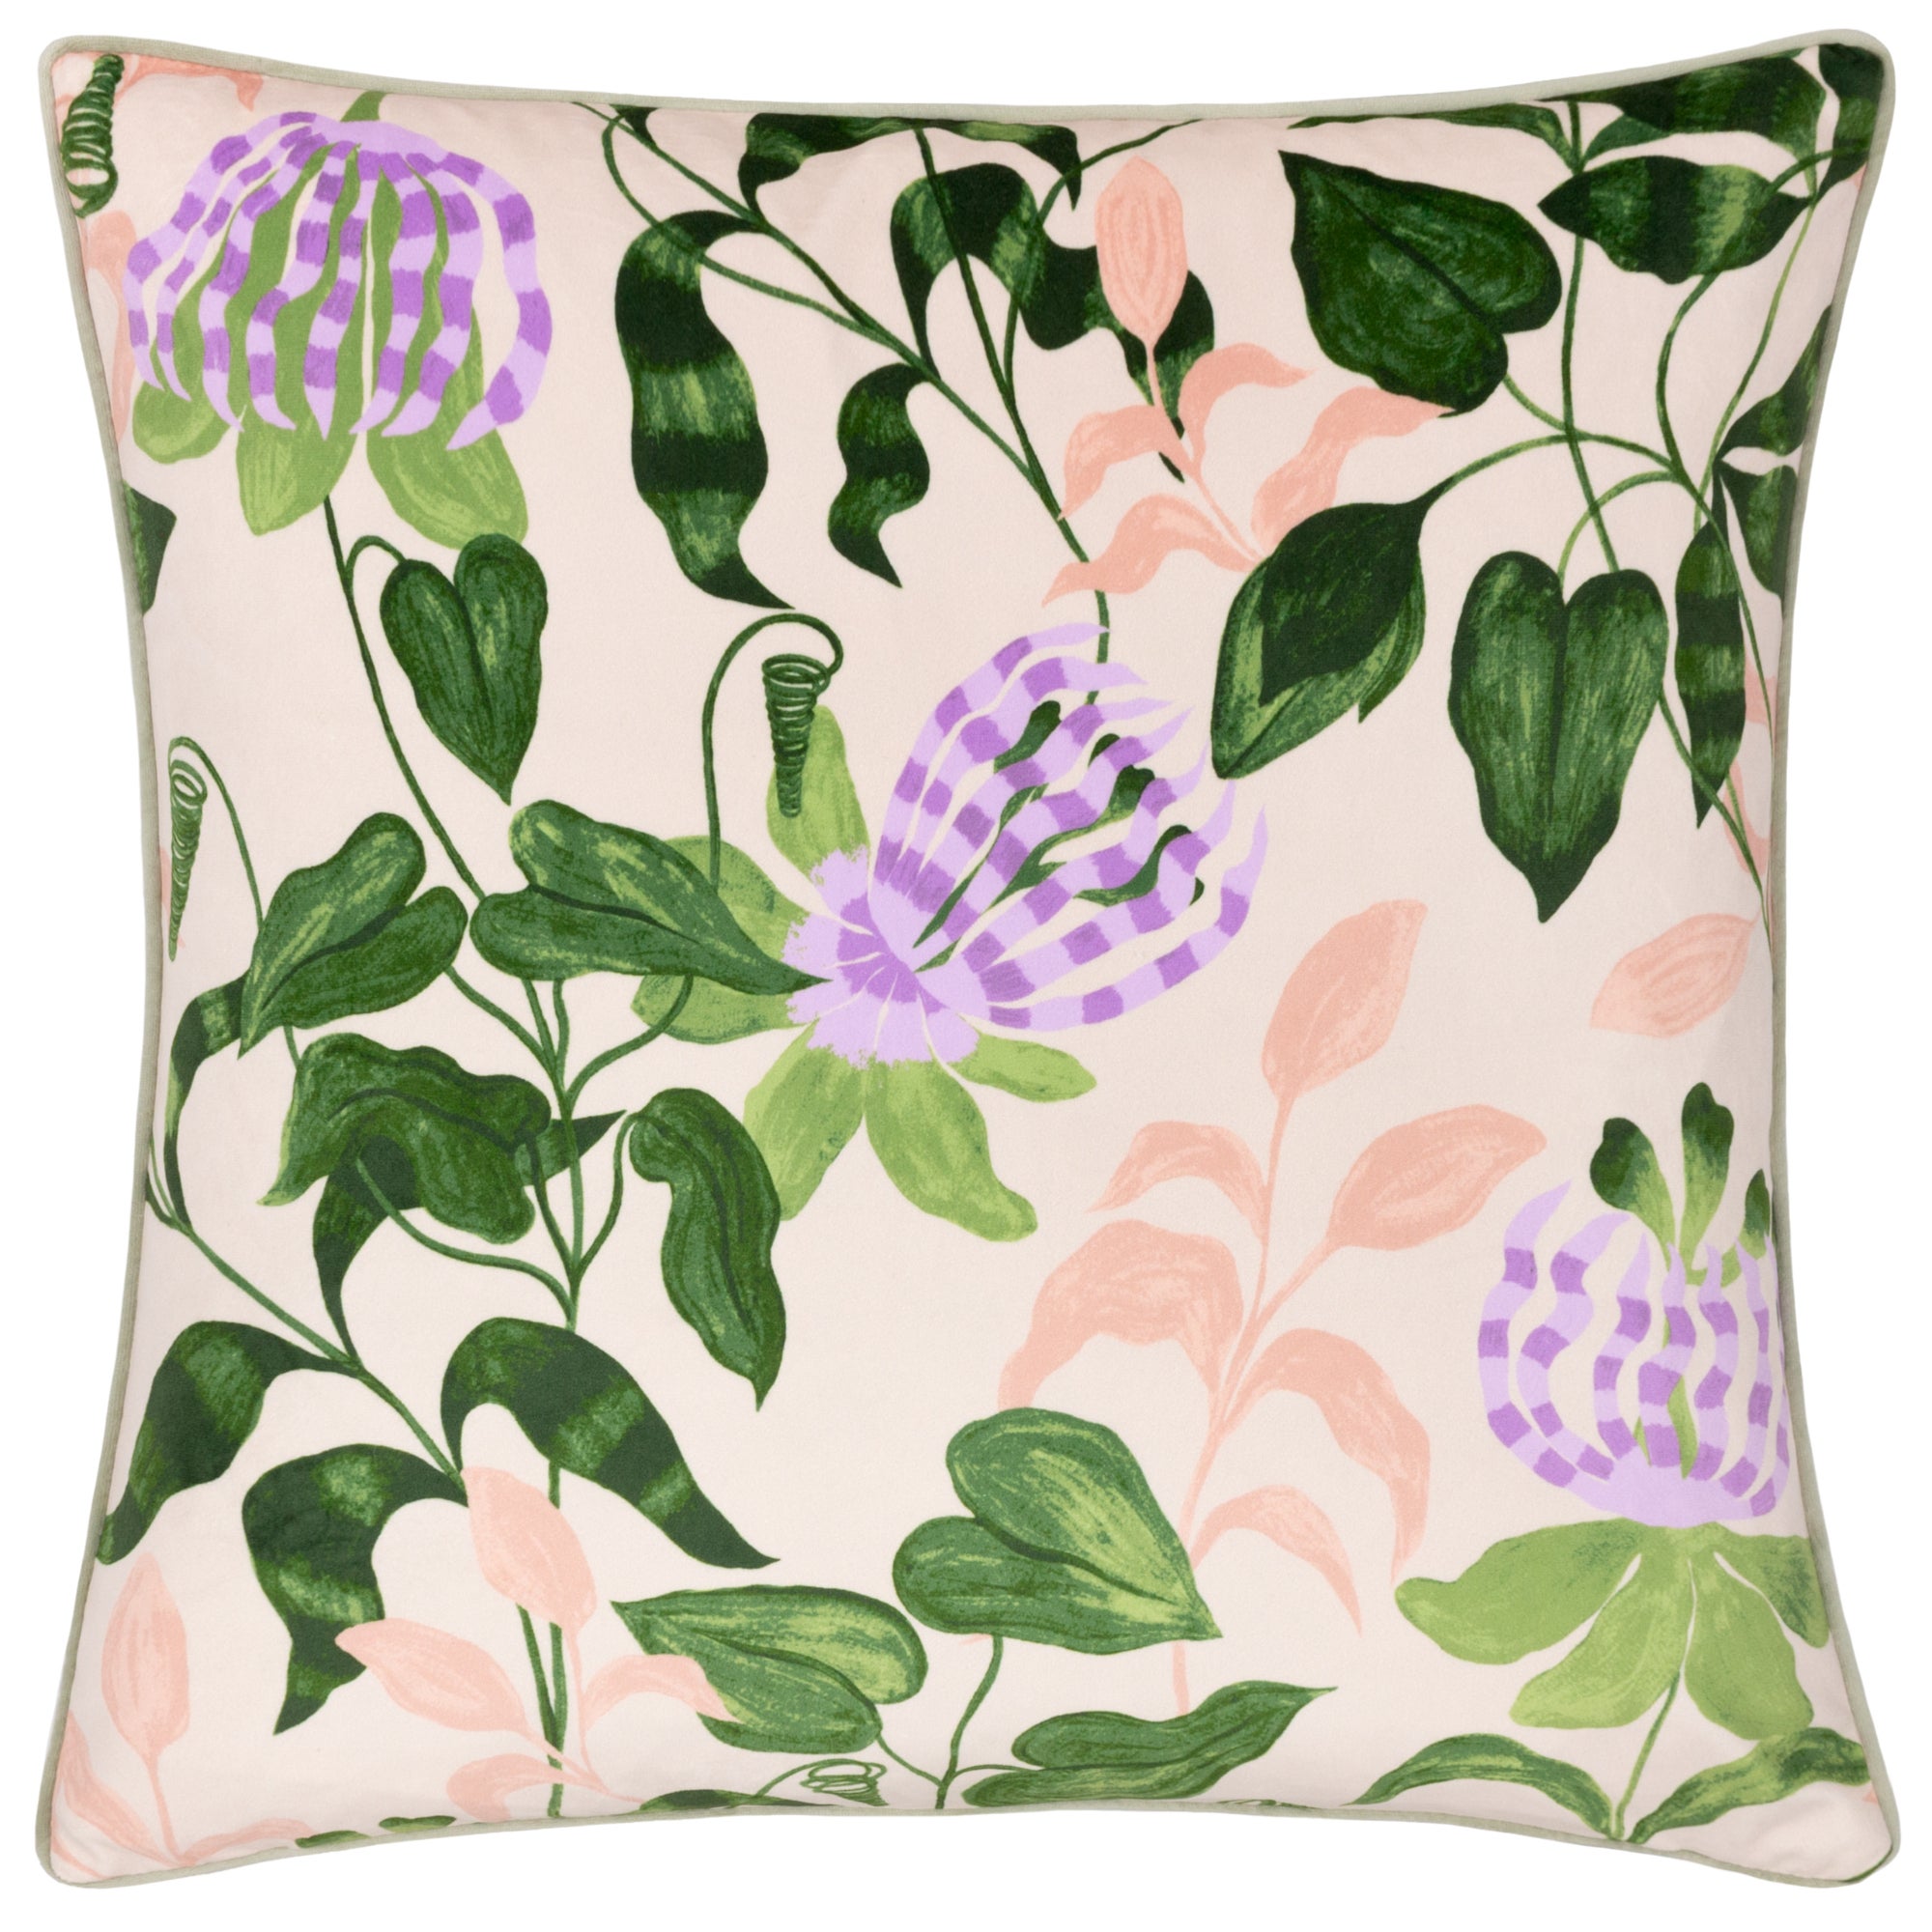 Wylder Passiflora Square Cushion